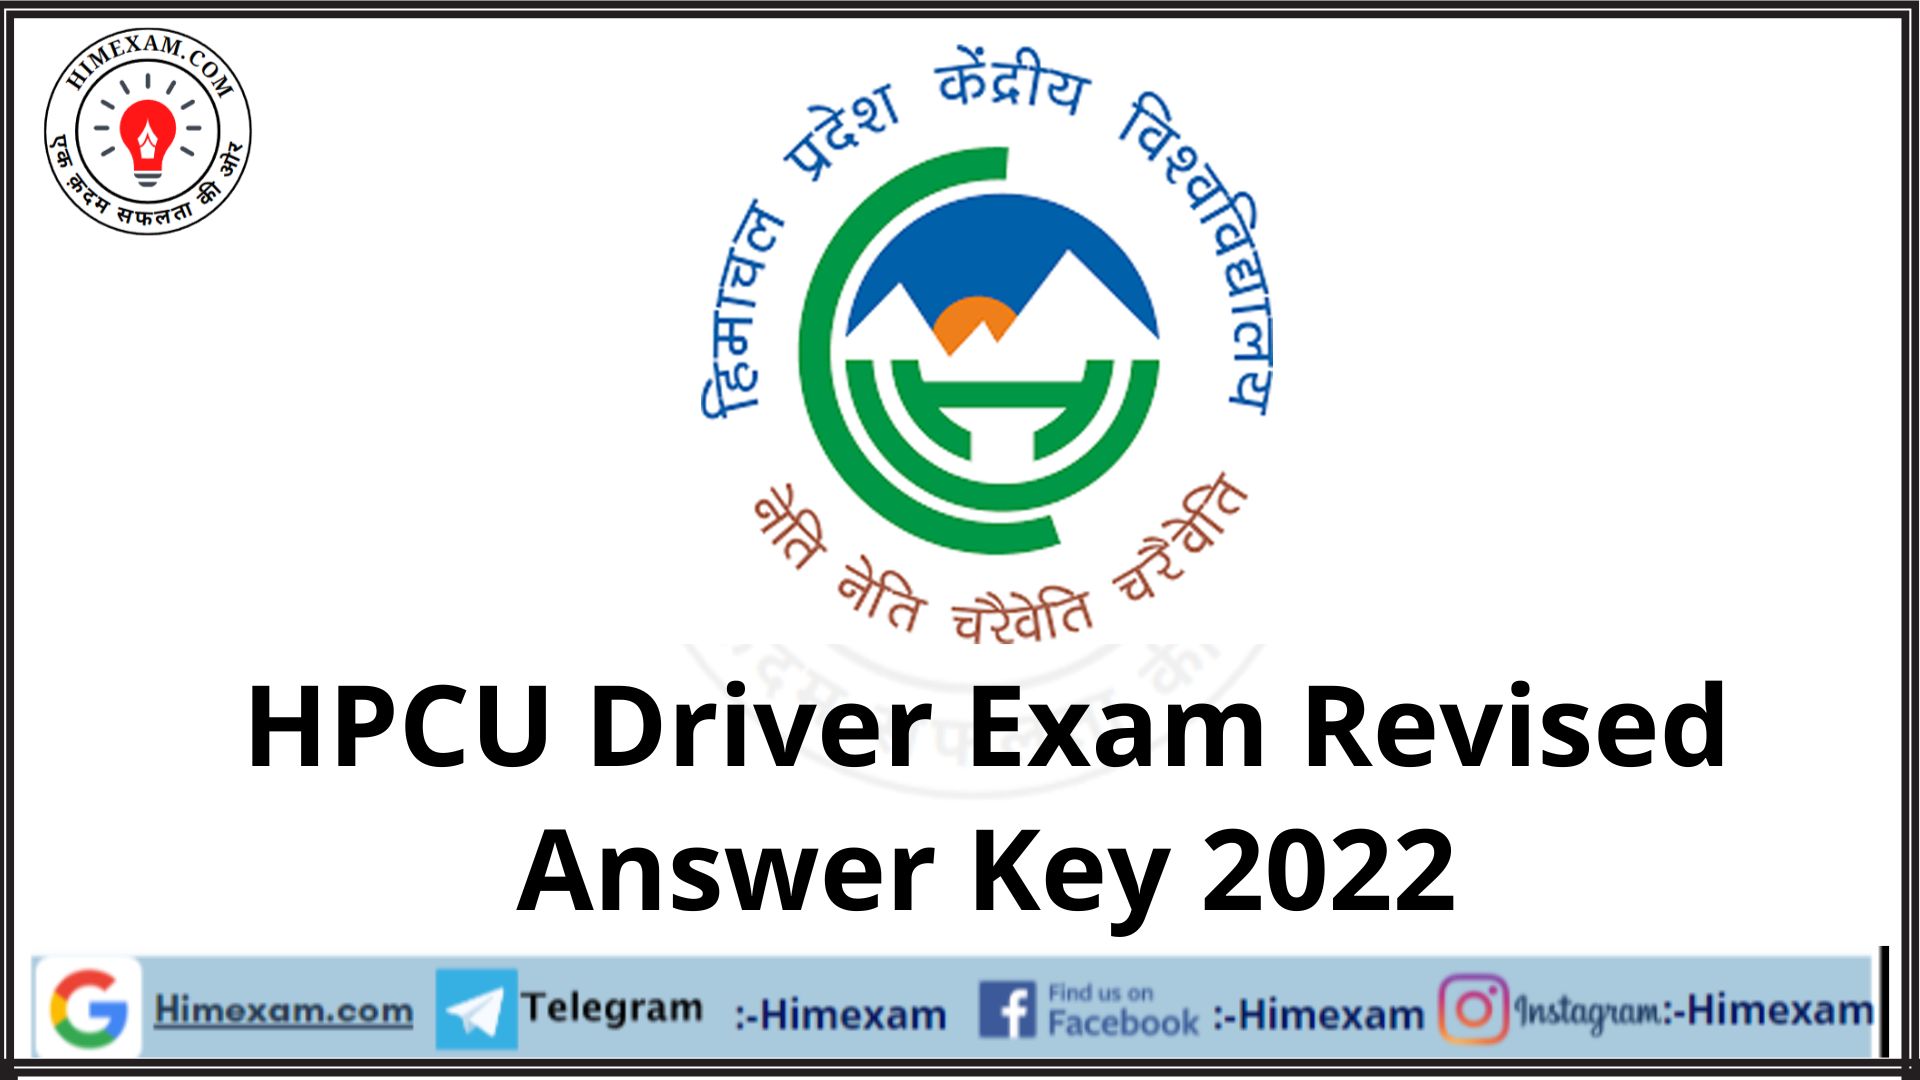 HPCU Driver Exam Revised Answer Key 2022